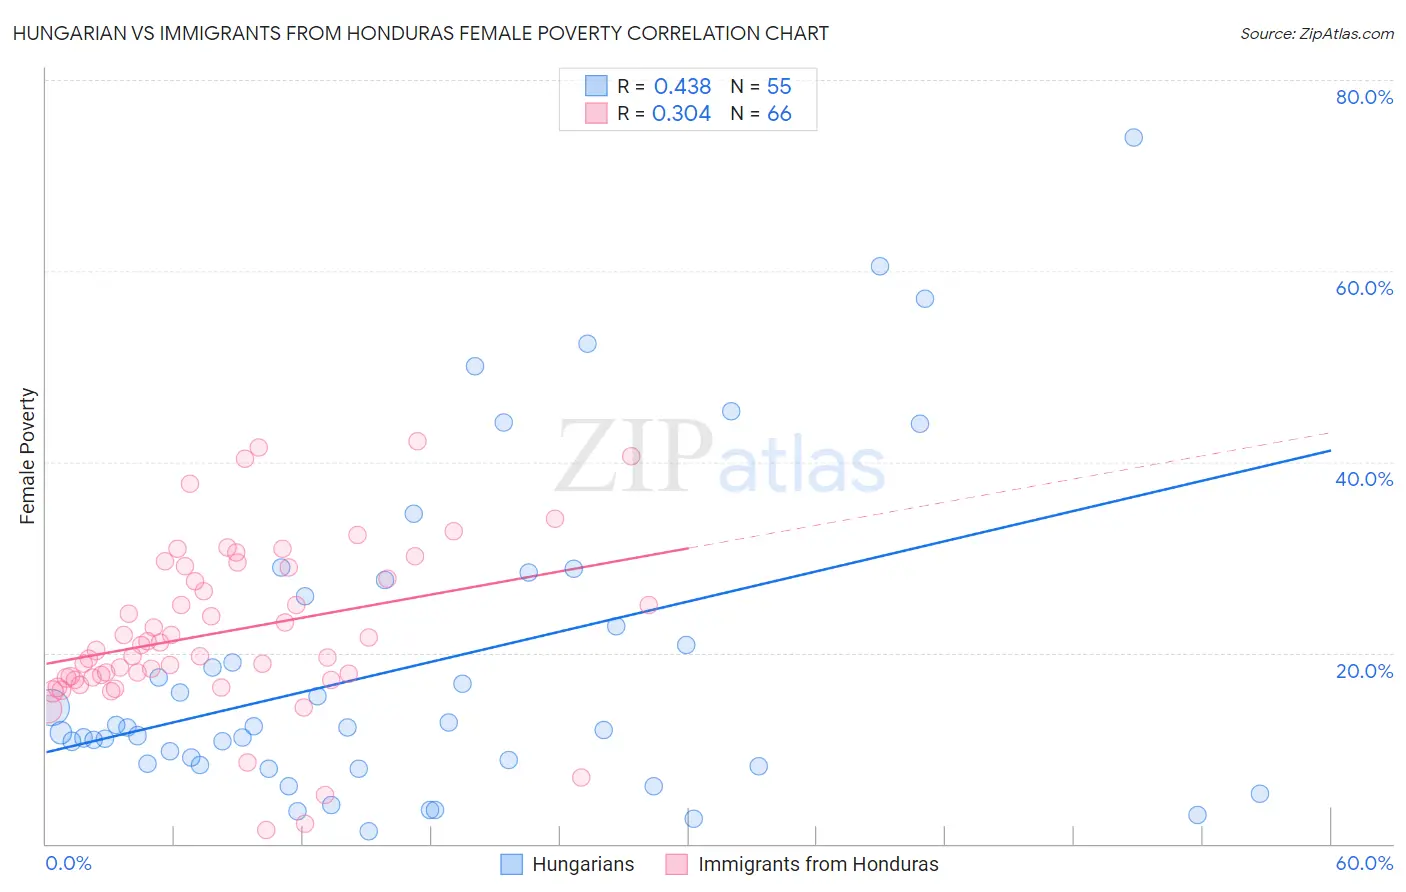 Hungarian vs Immigrants from Honduras Female Poverty